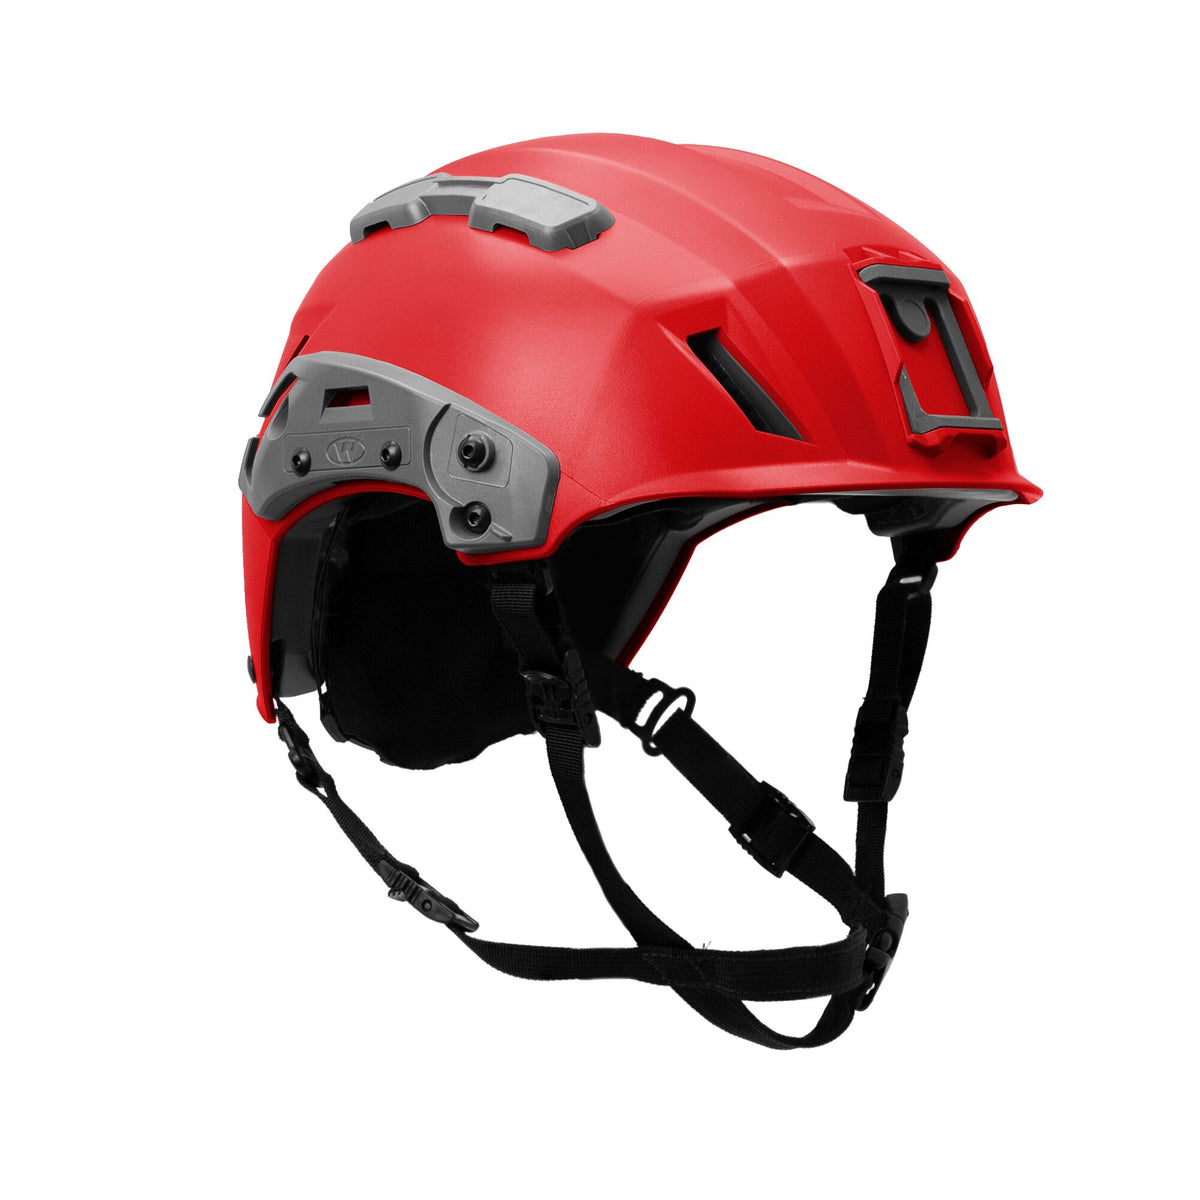 Team Wendy EXFIL SAR TACTICAL HELMET– Rescue Gear